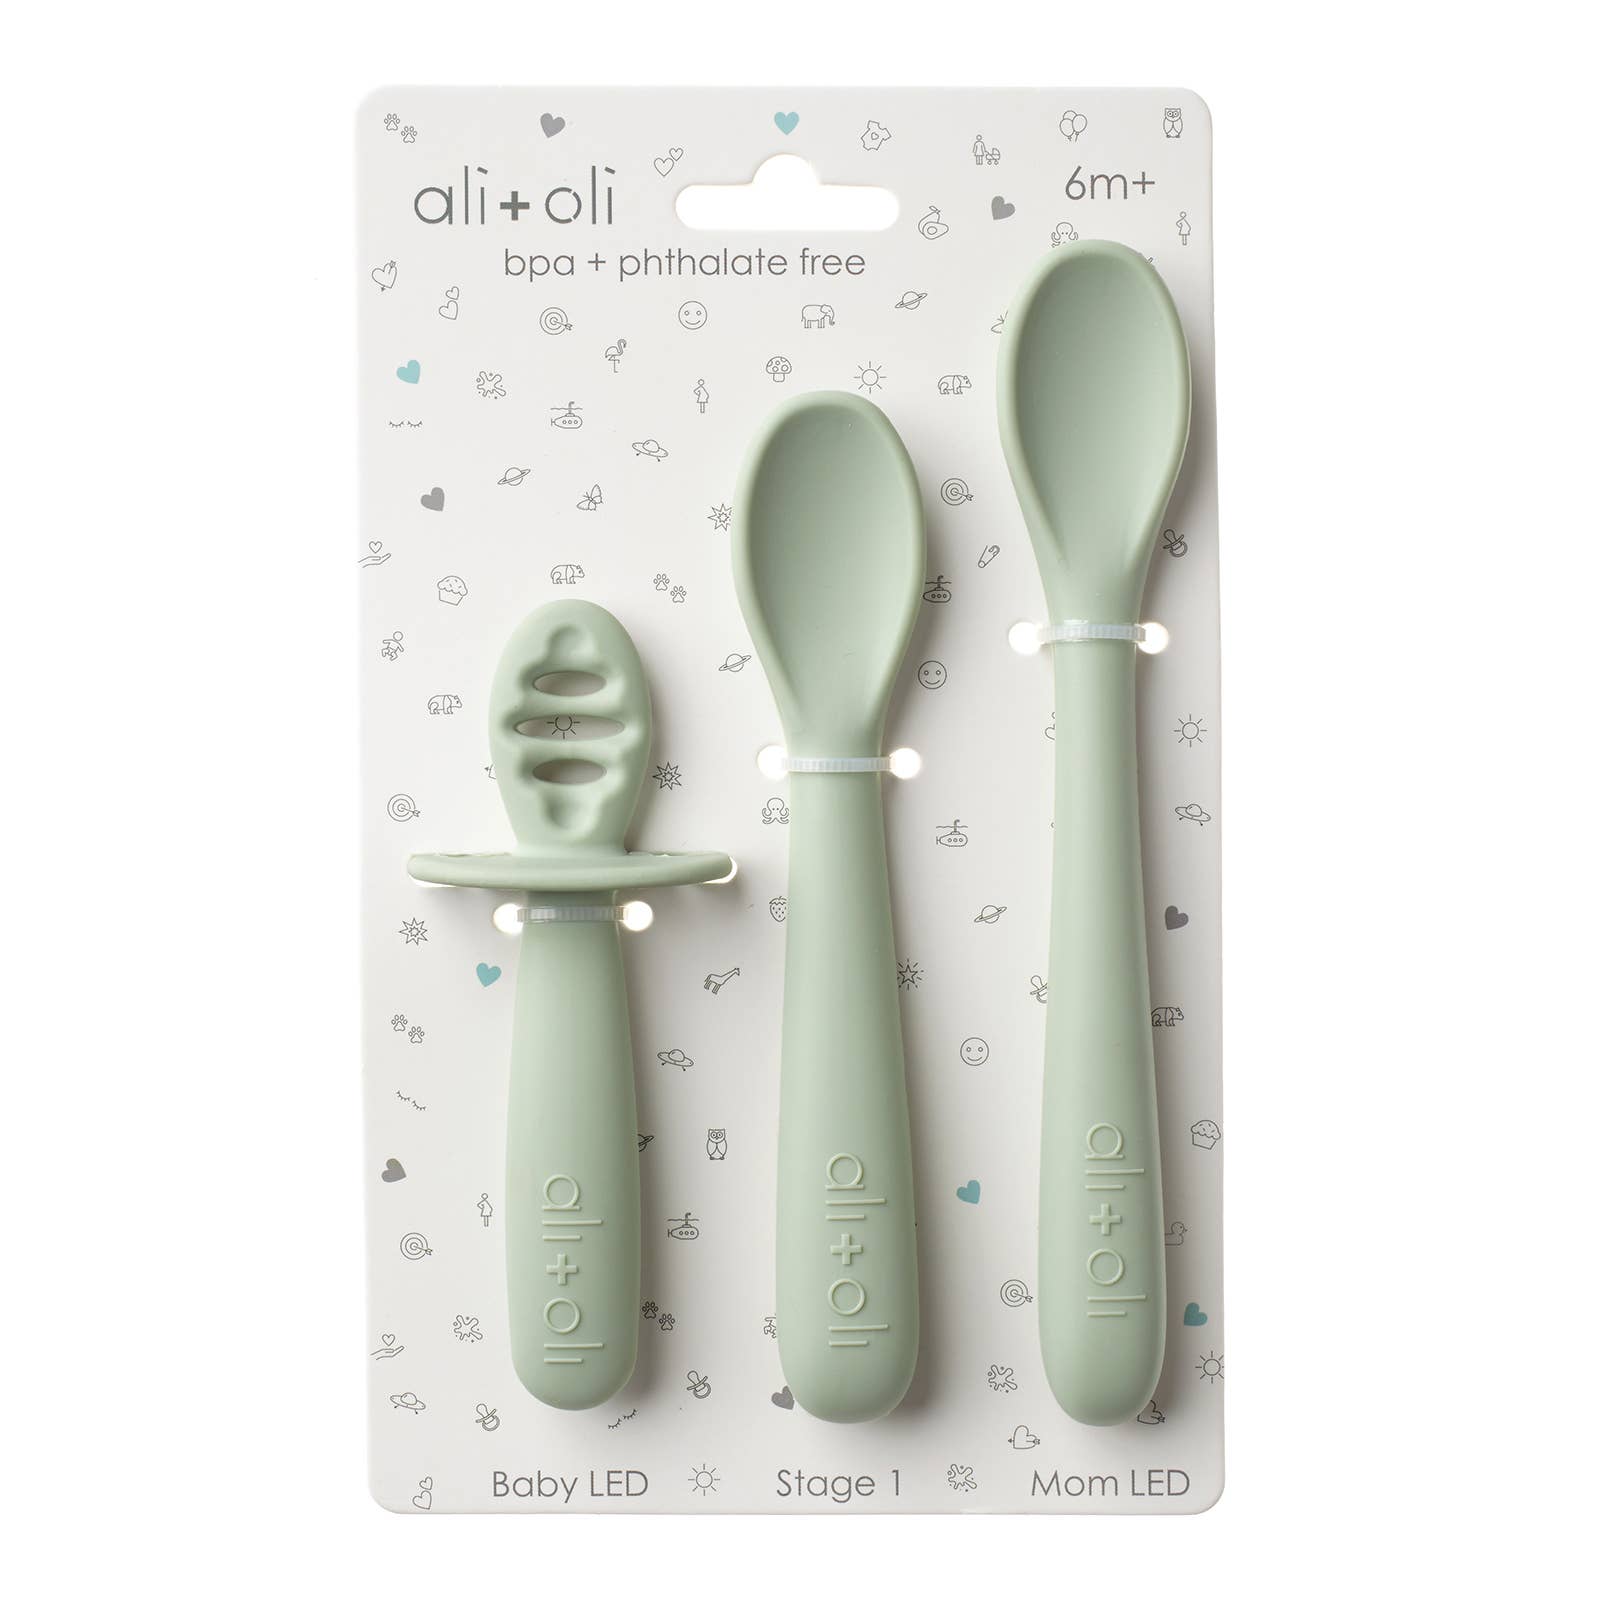 EzPz Silicone Tiny Spoon  Tiny spoons, Baby learning, Ezpz